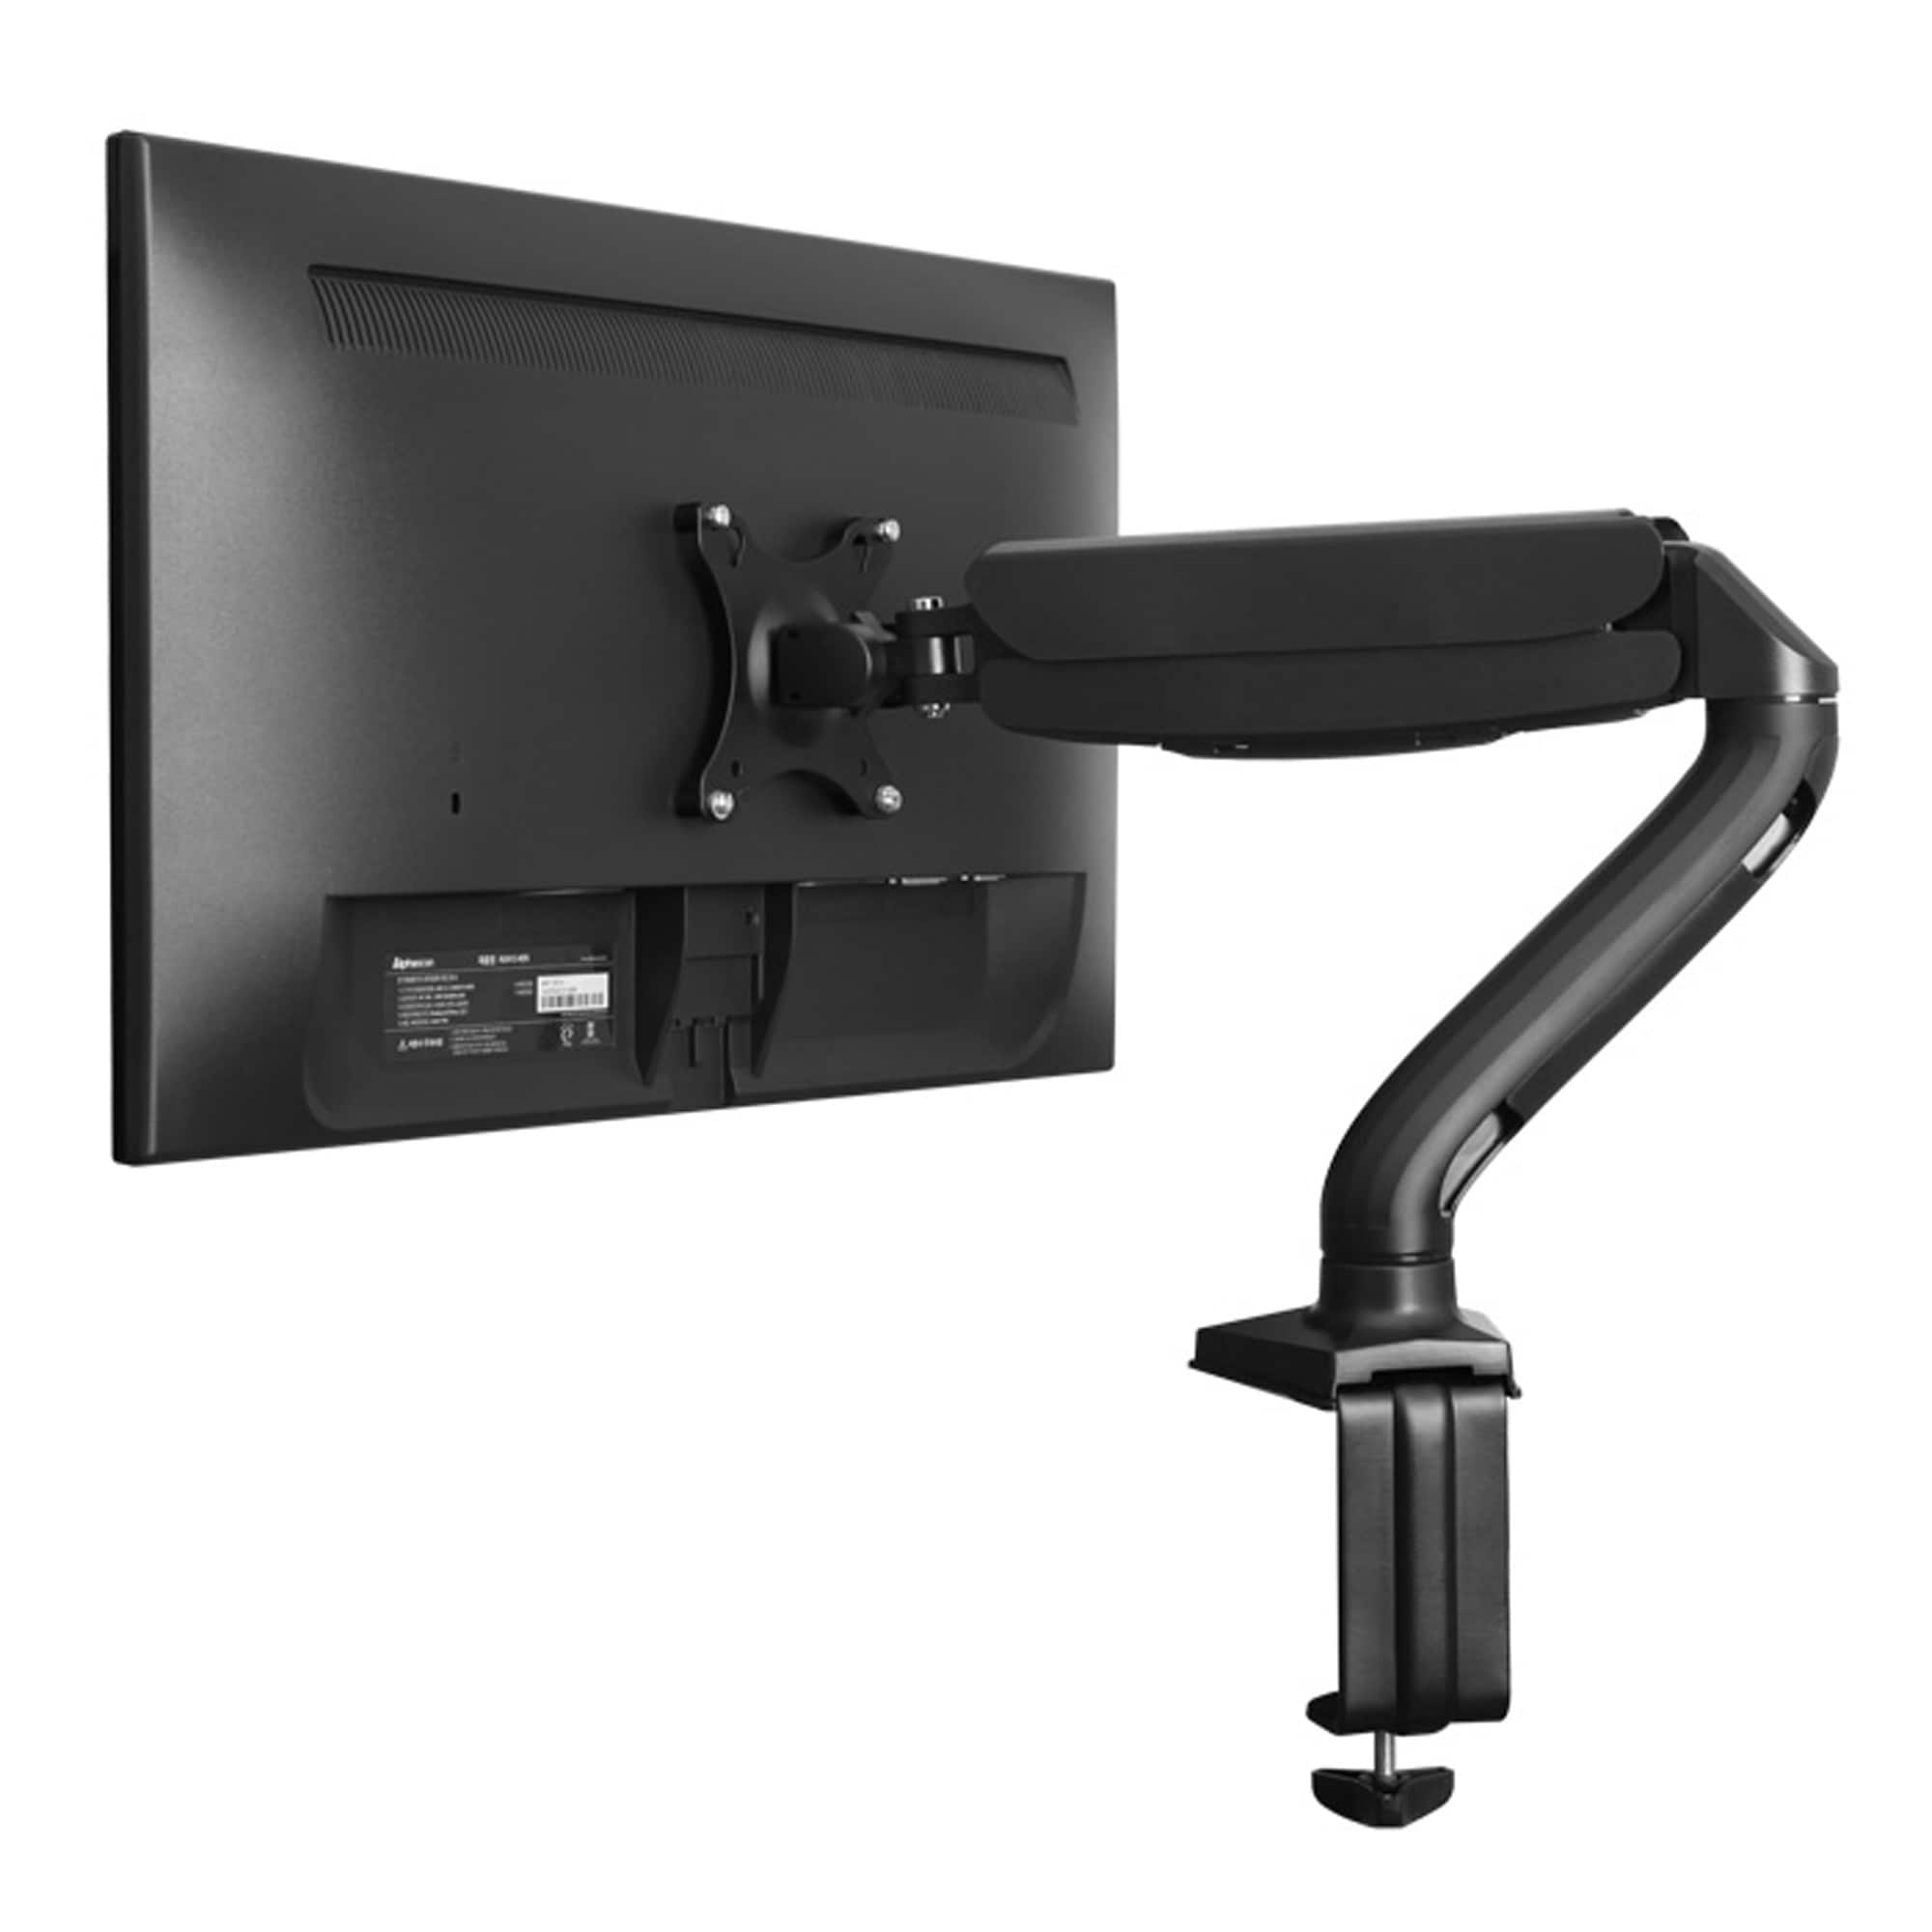 Adjustable Ergonomic Computer Monitor Arms, Stands, Risers & Mounts –  UncagedErgonomics